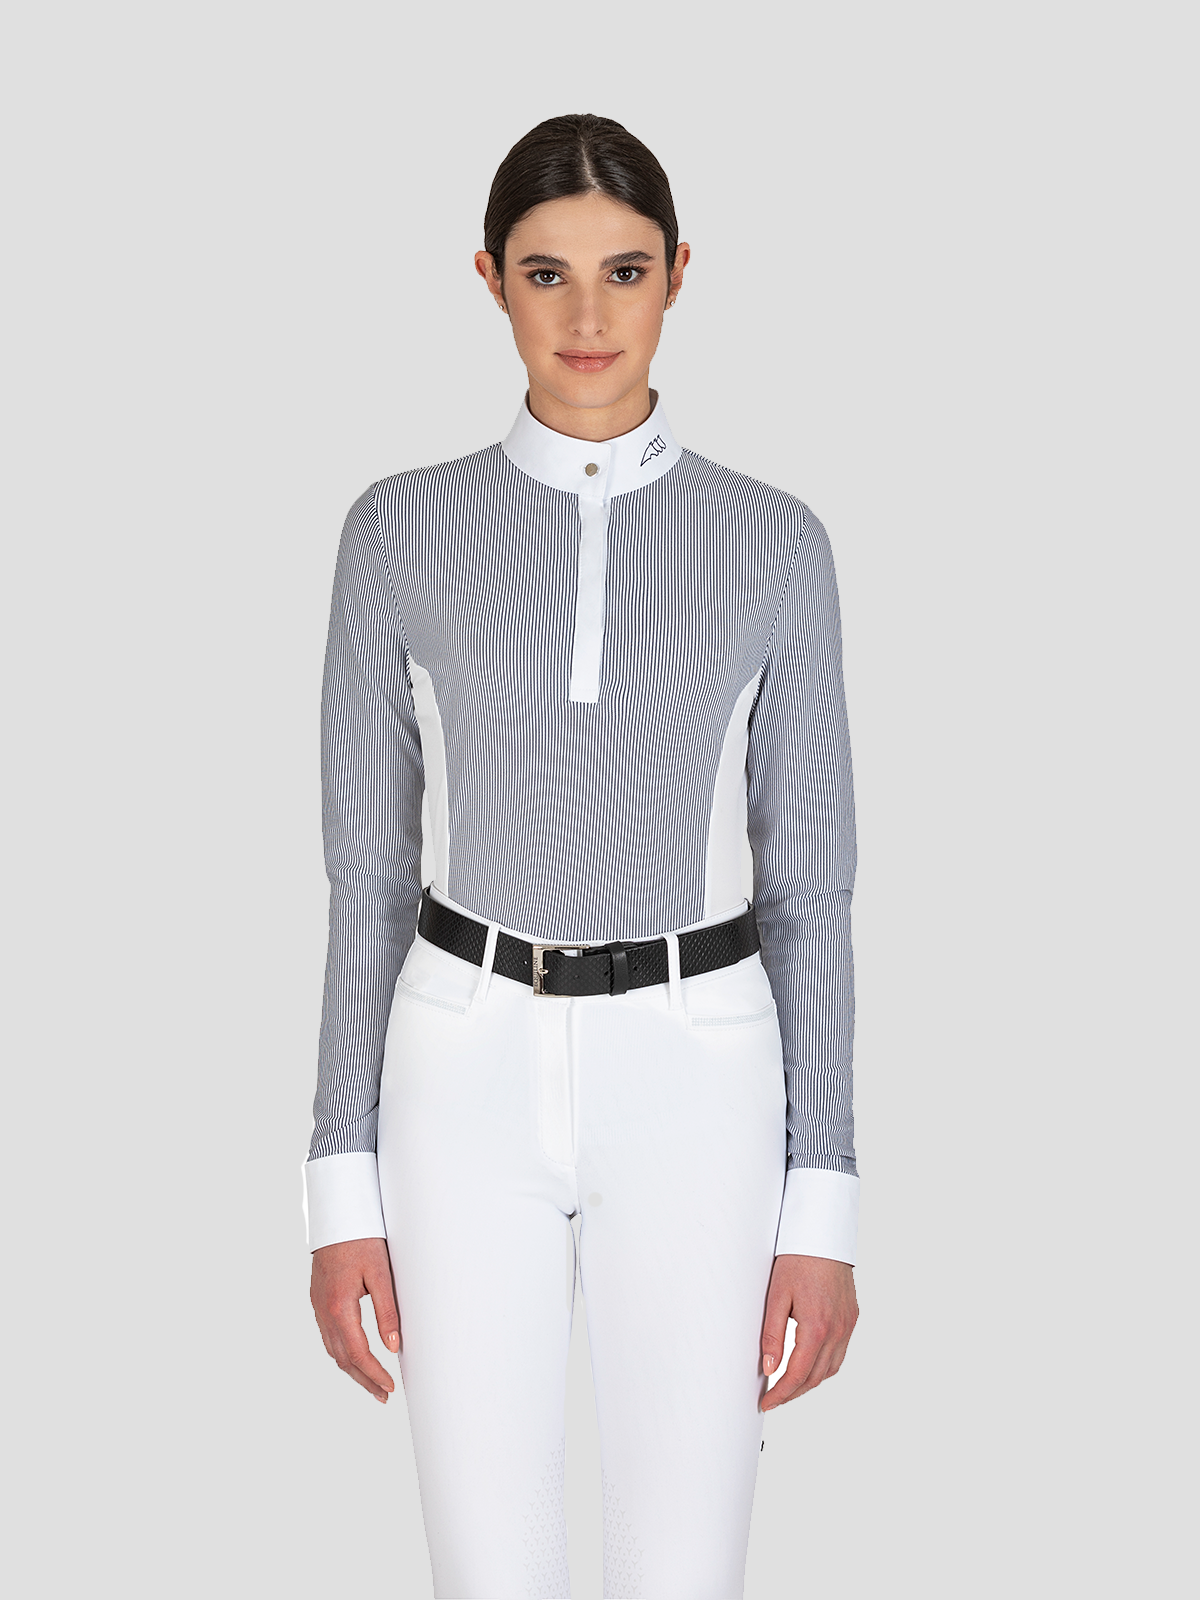 Eliciae Long Sleeve Women's Pinstripe Show Shirt - front view